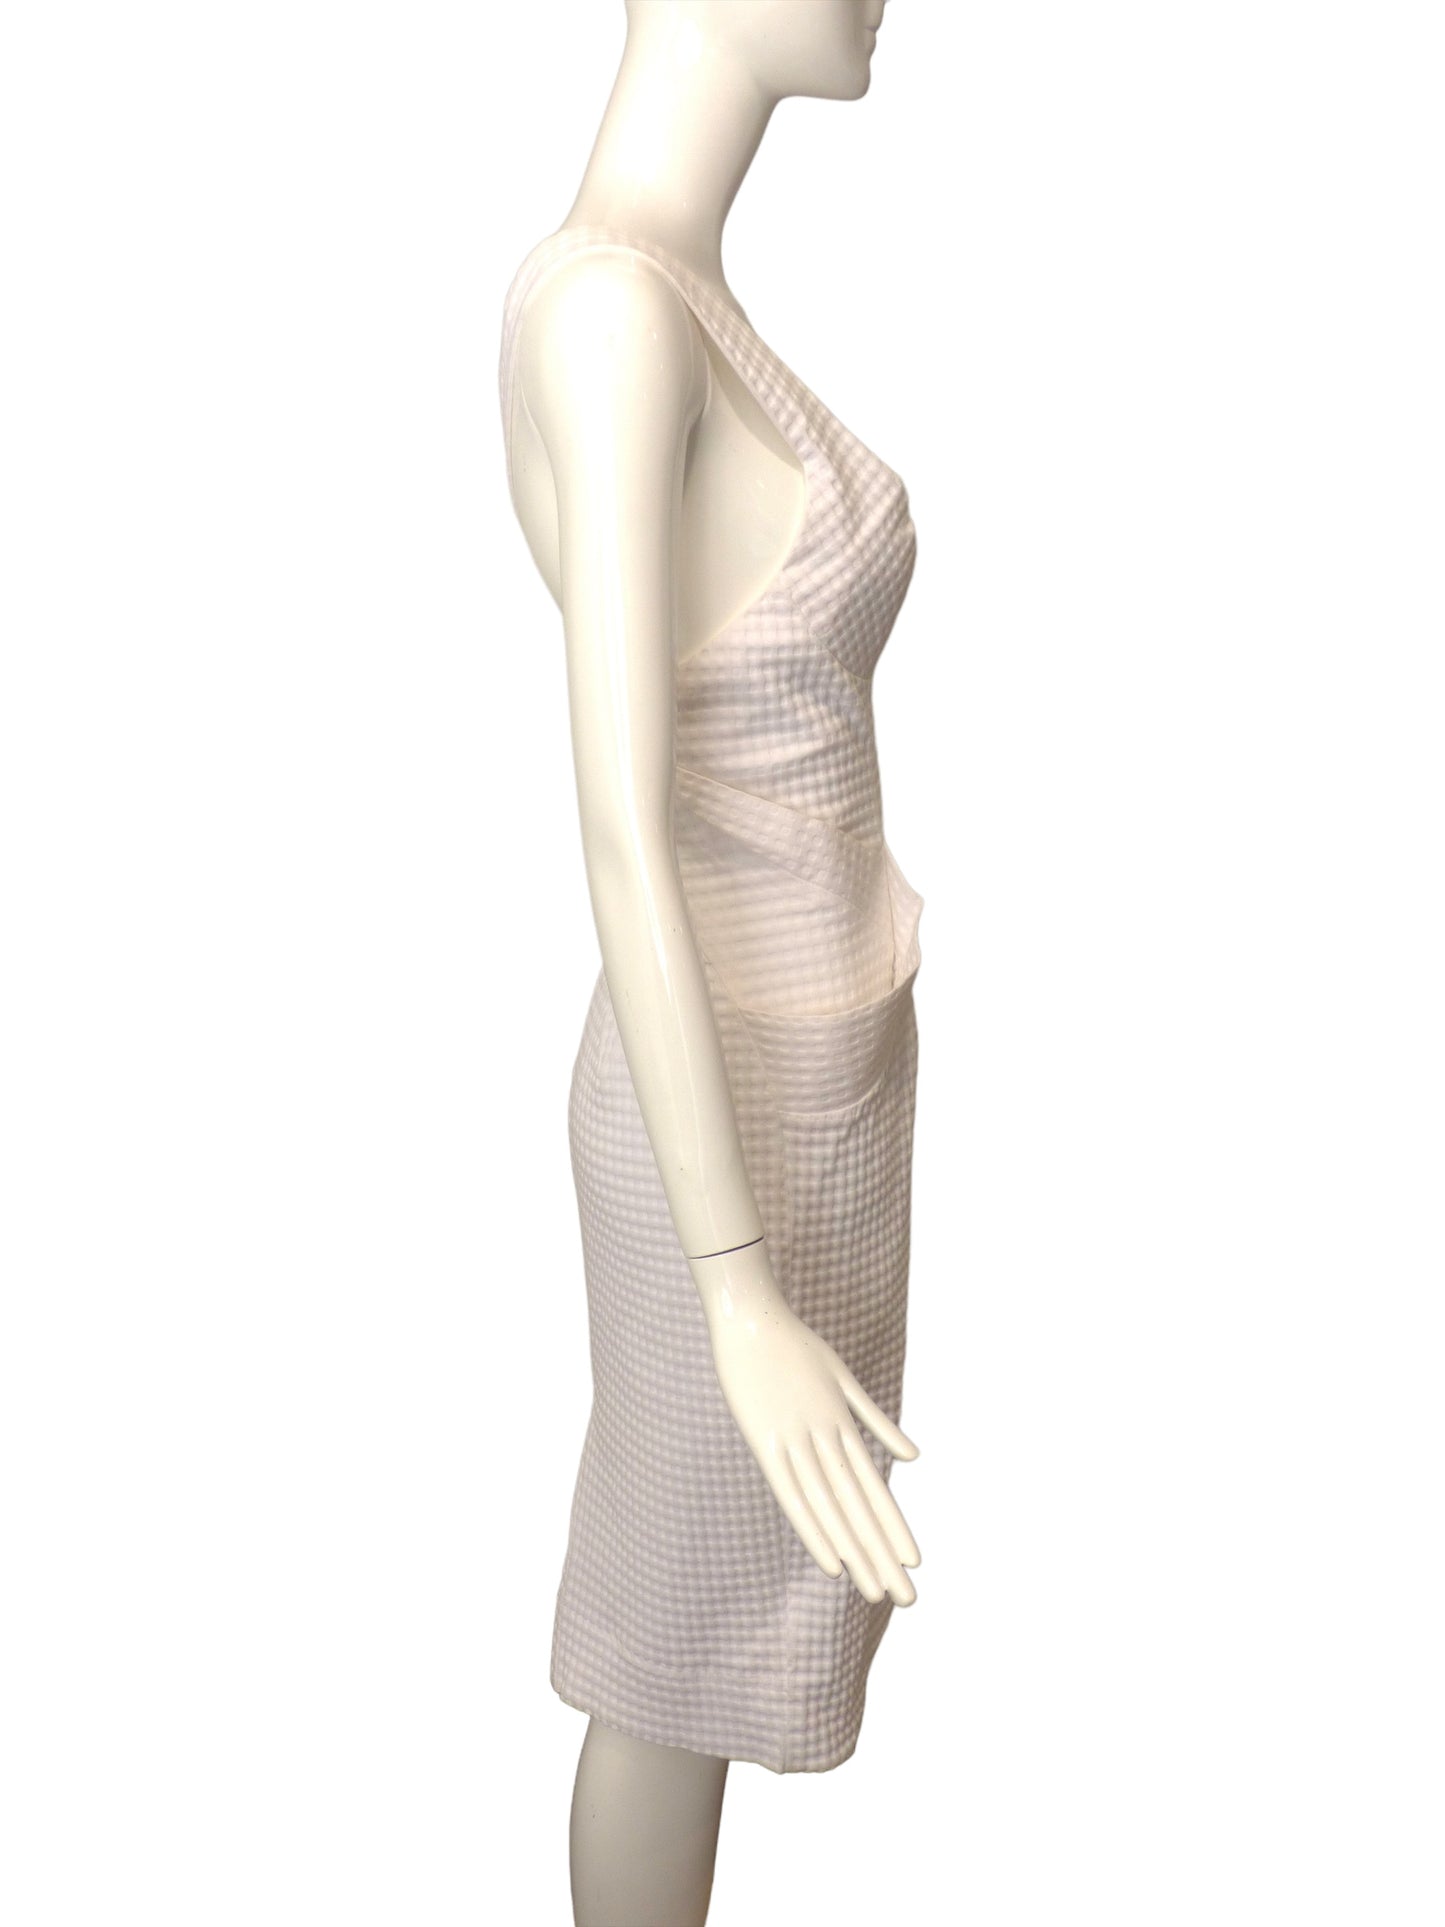 VIVIENNE WESTWOOD- NWT White Cotton Brocade Dress, Size 8